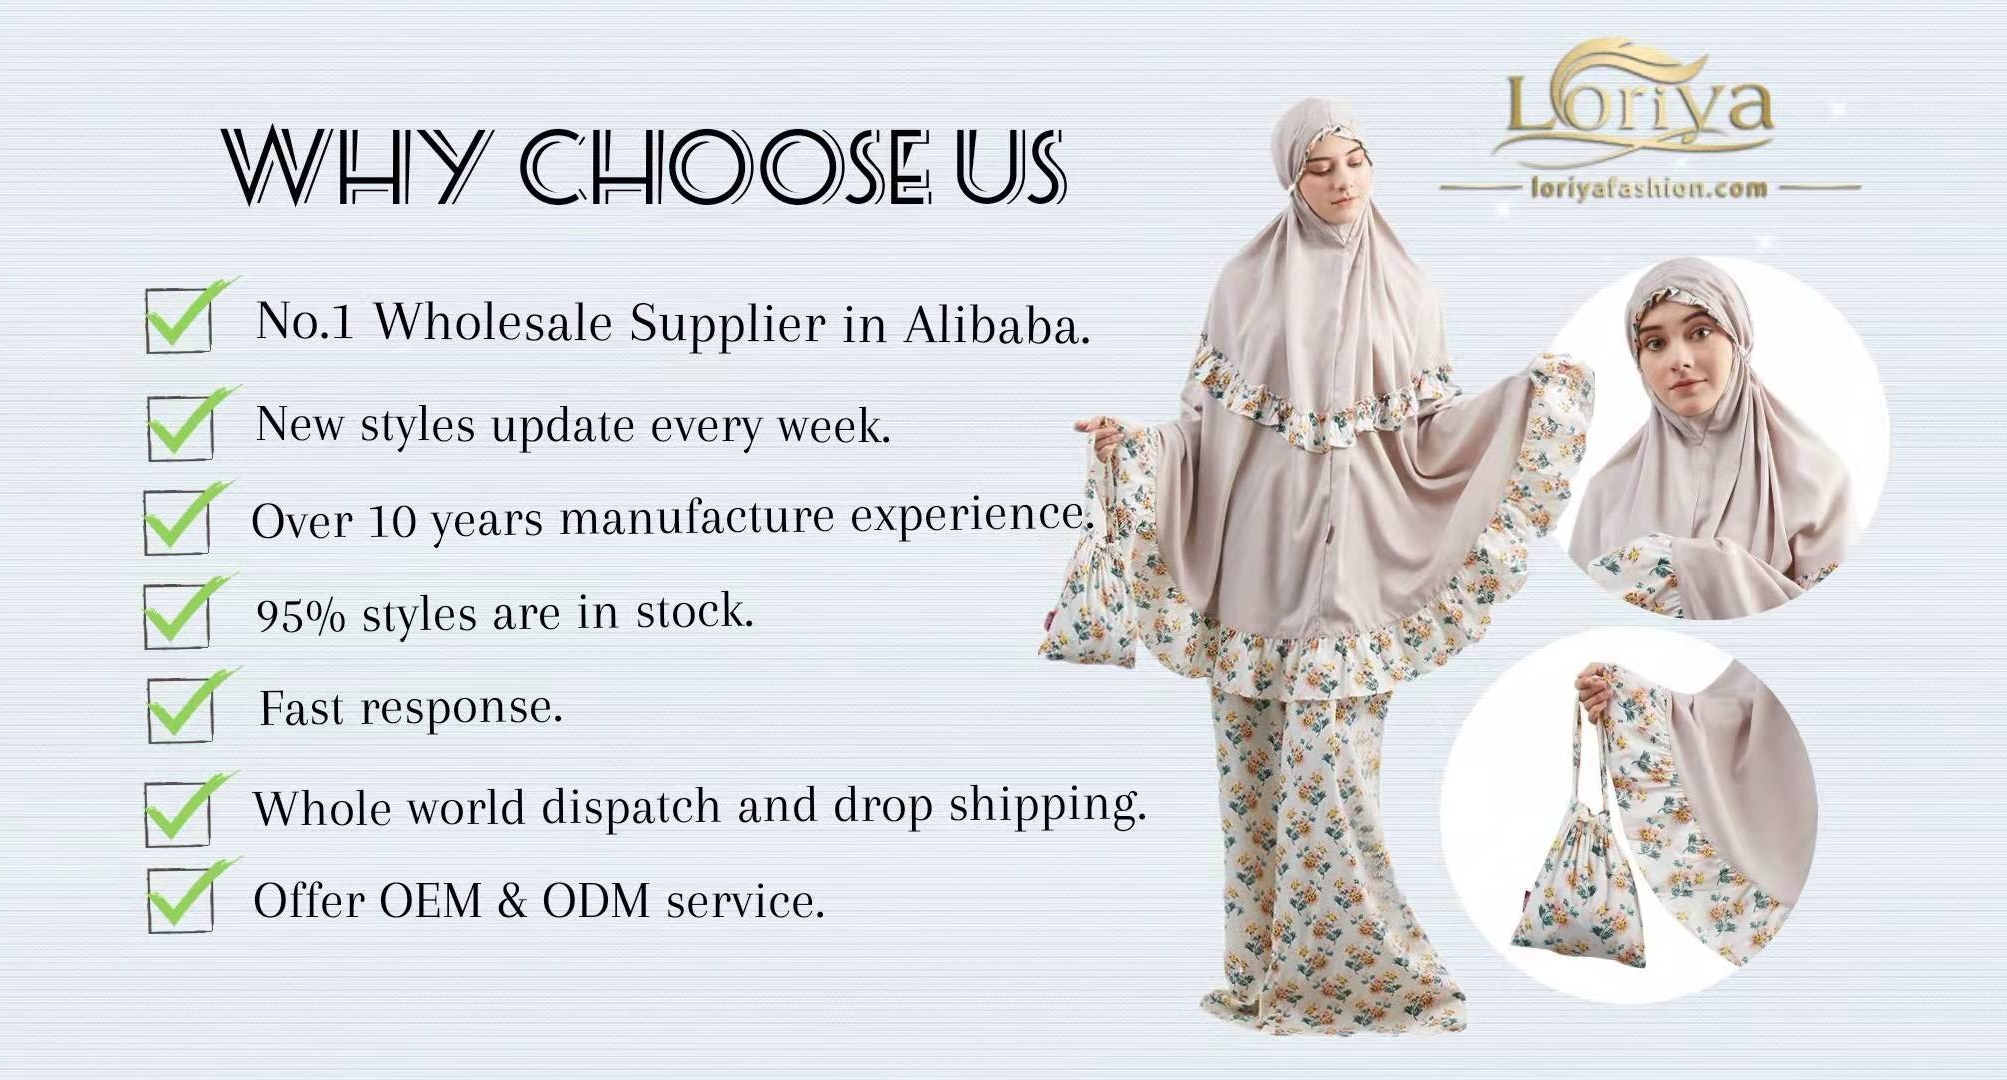 Islamic Clothing Kaftan Style Umbrella Nida Abaya Burkha For Women Islamic Dress